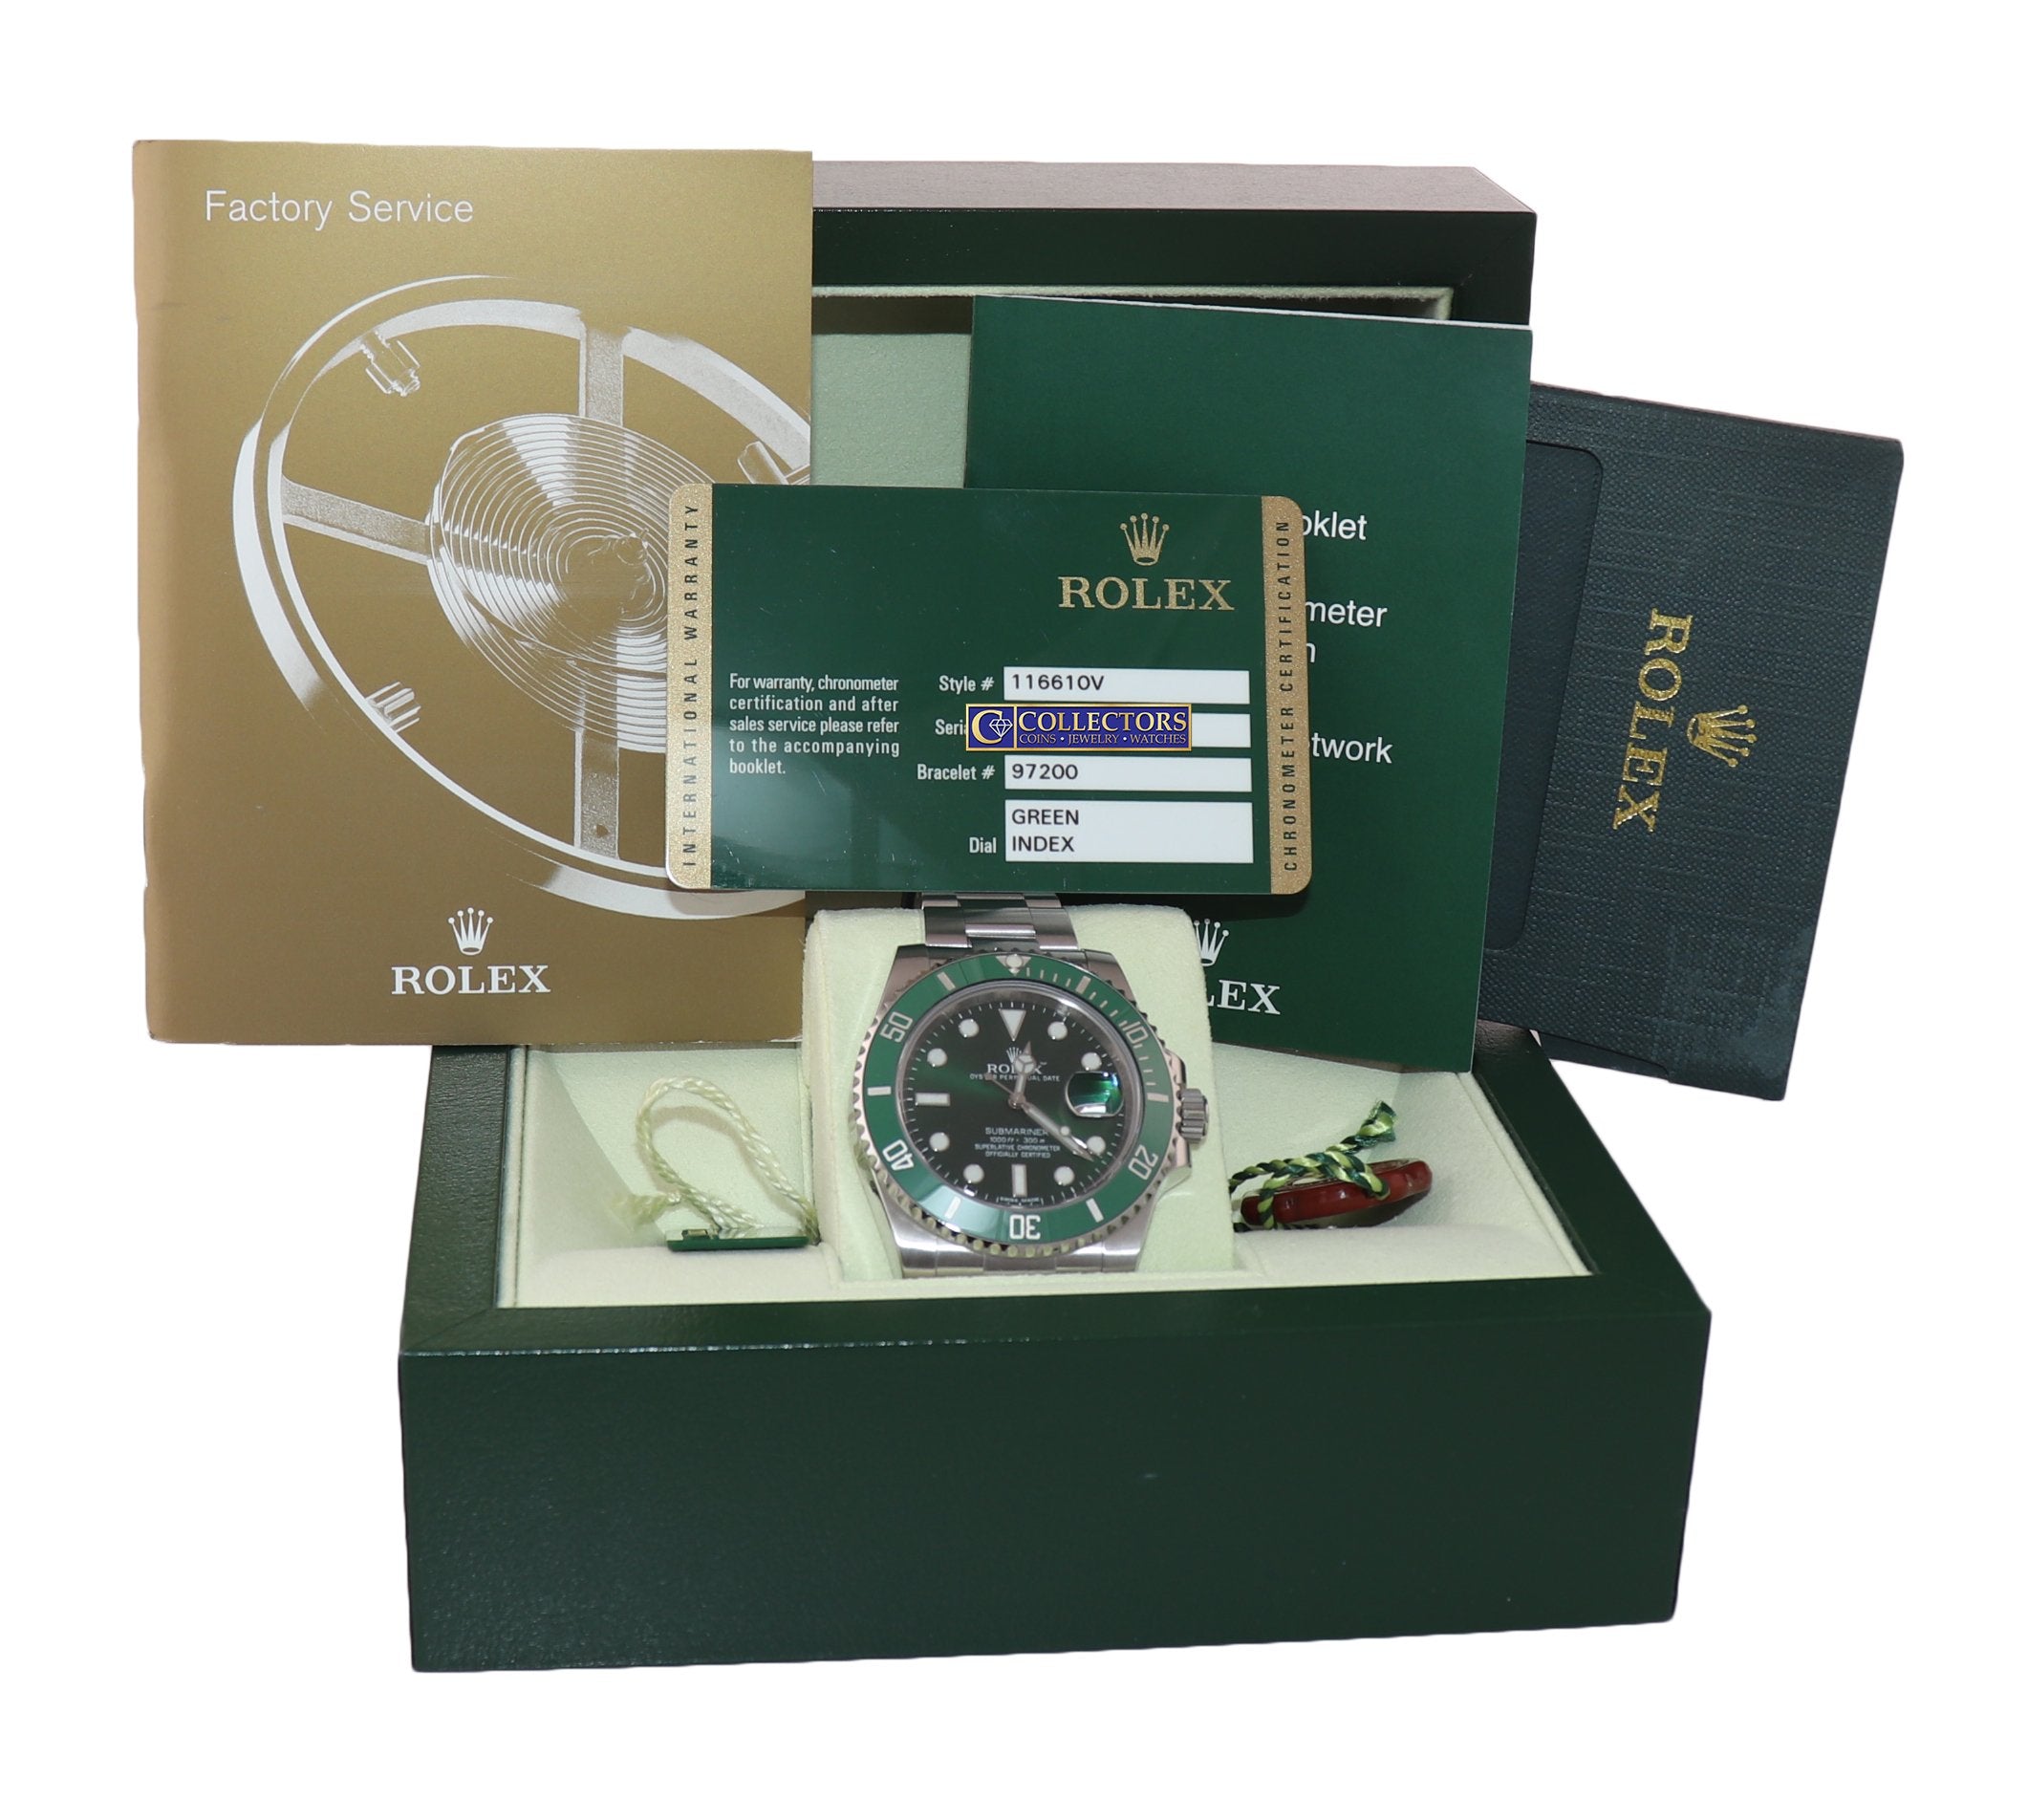 2015 PAPERS Rolex Submariner Hulk Green Ceramic 116610LV Steel Watch Box